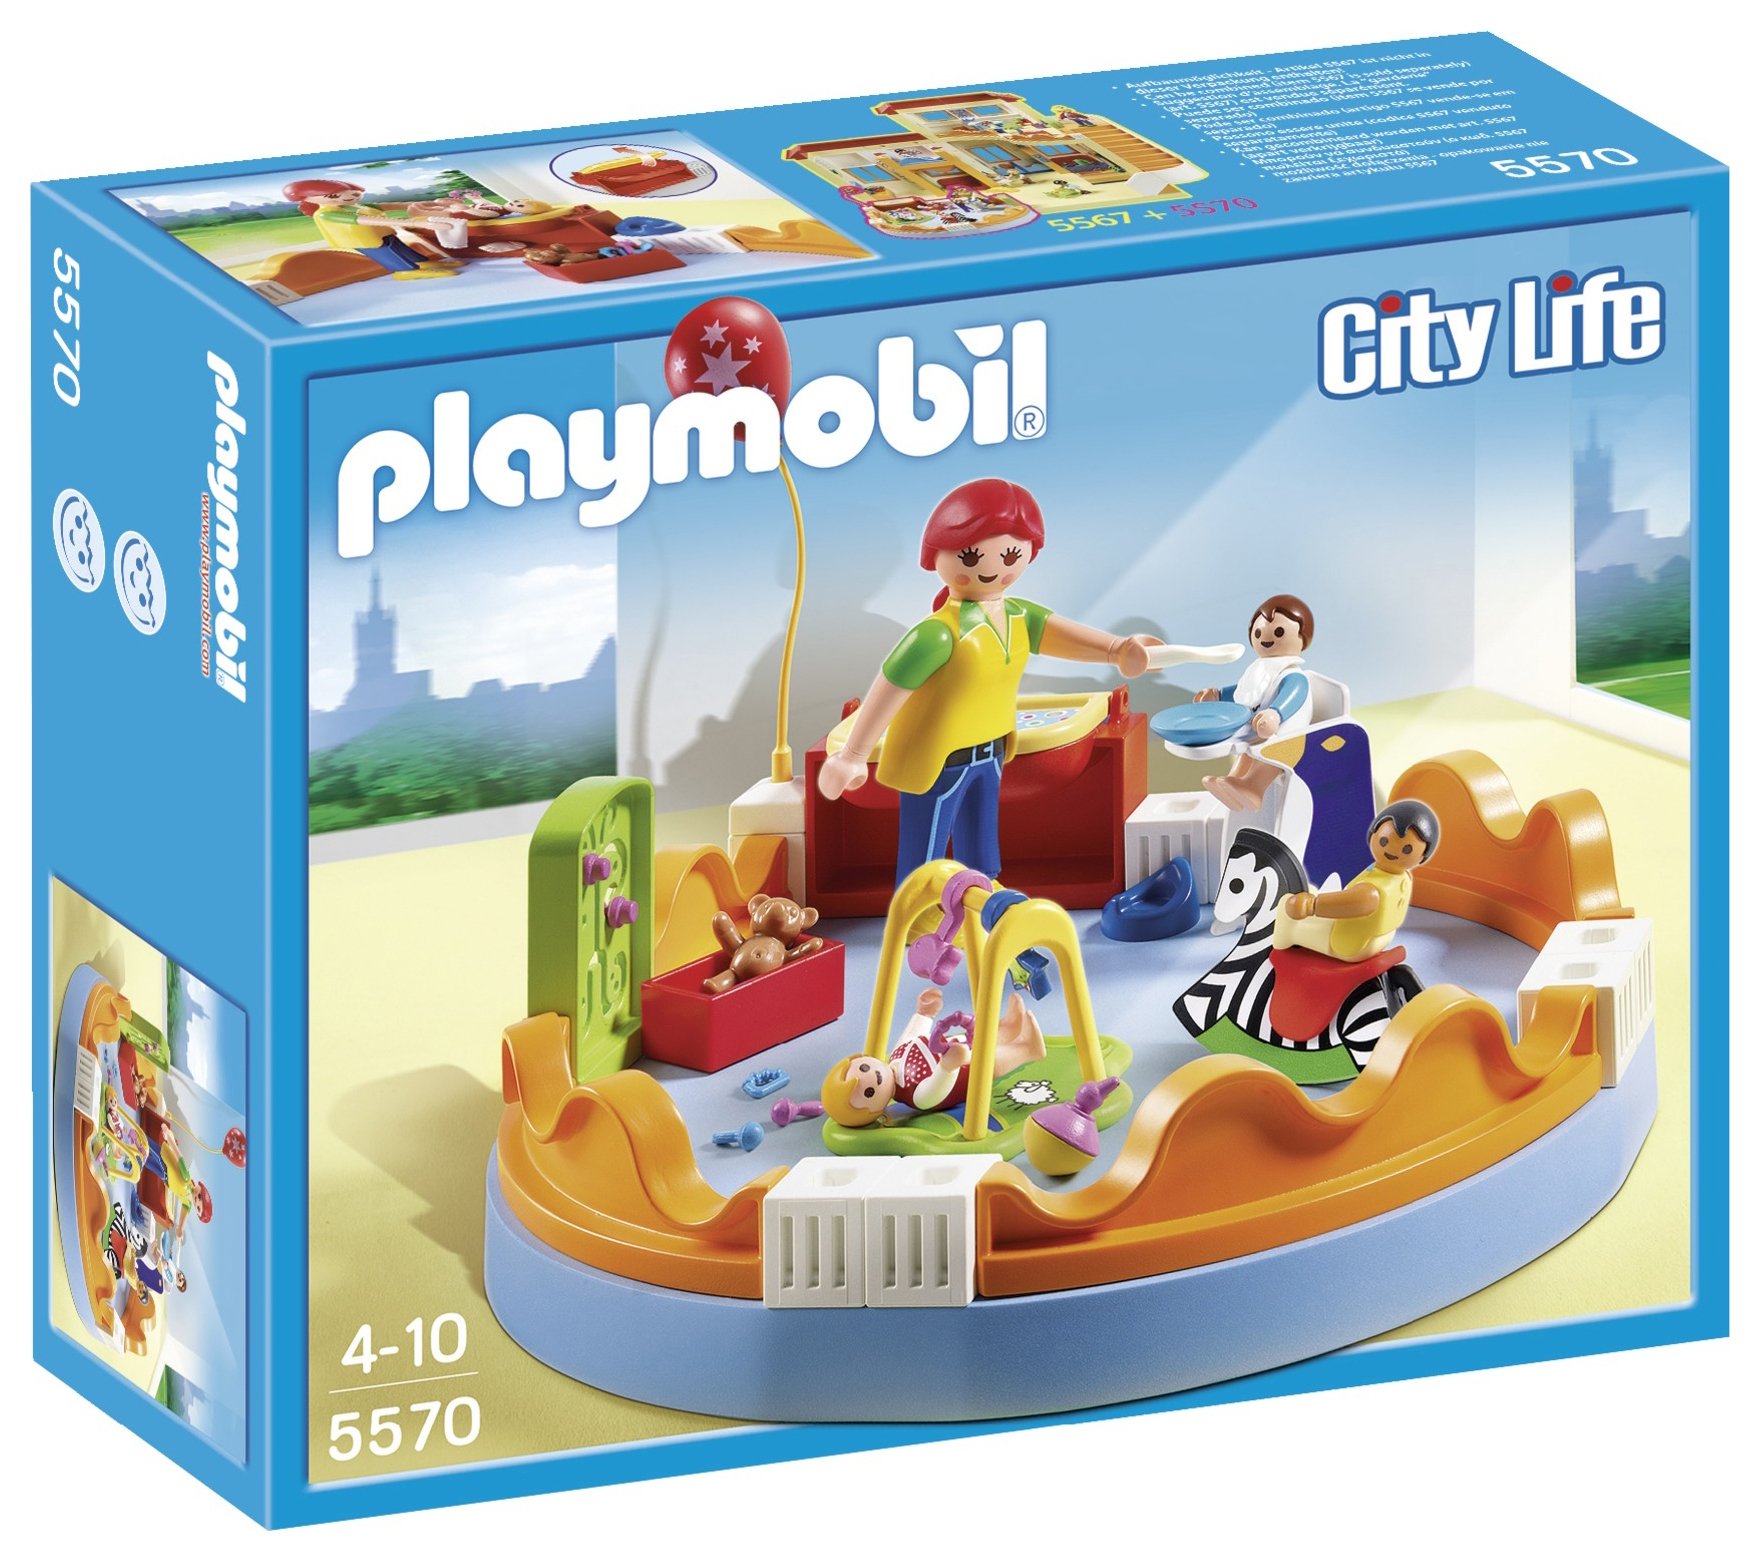 Playmobil 5570 City Life Playgroup.